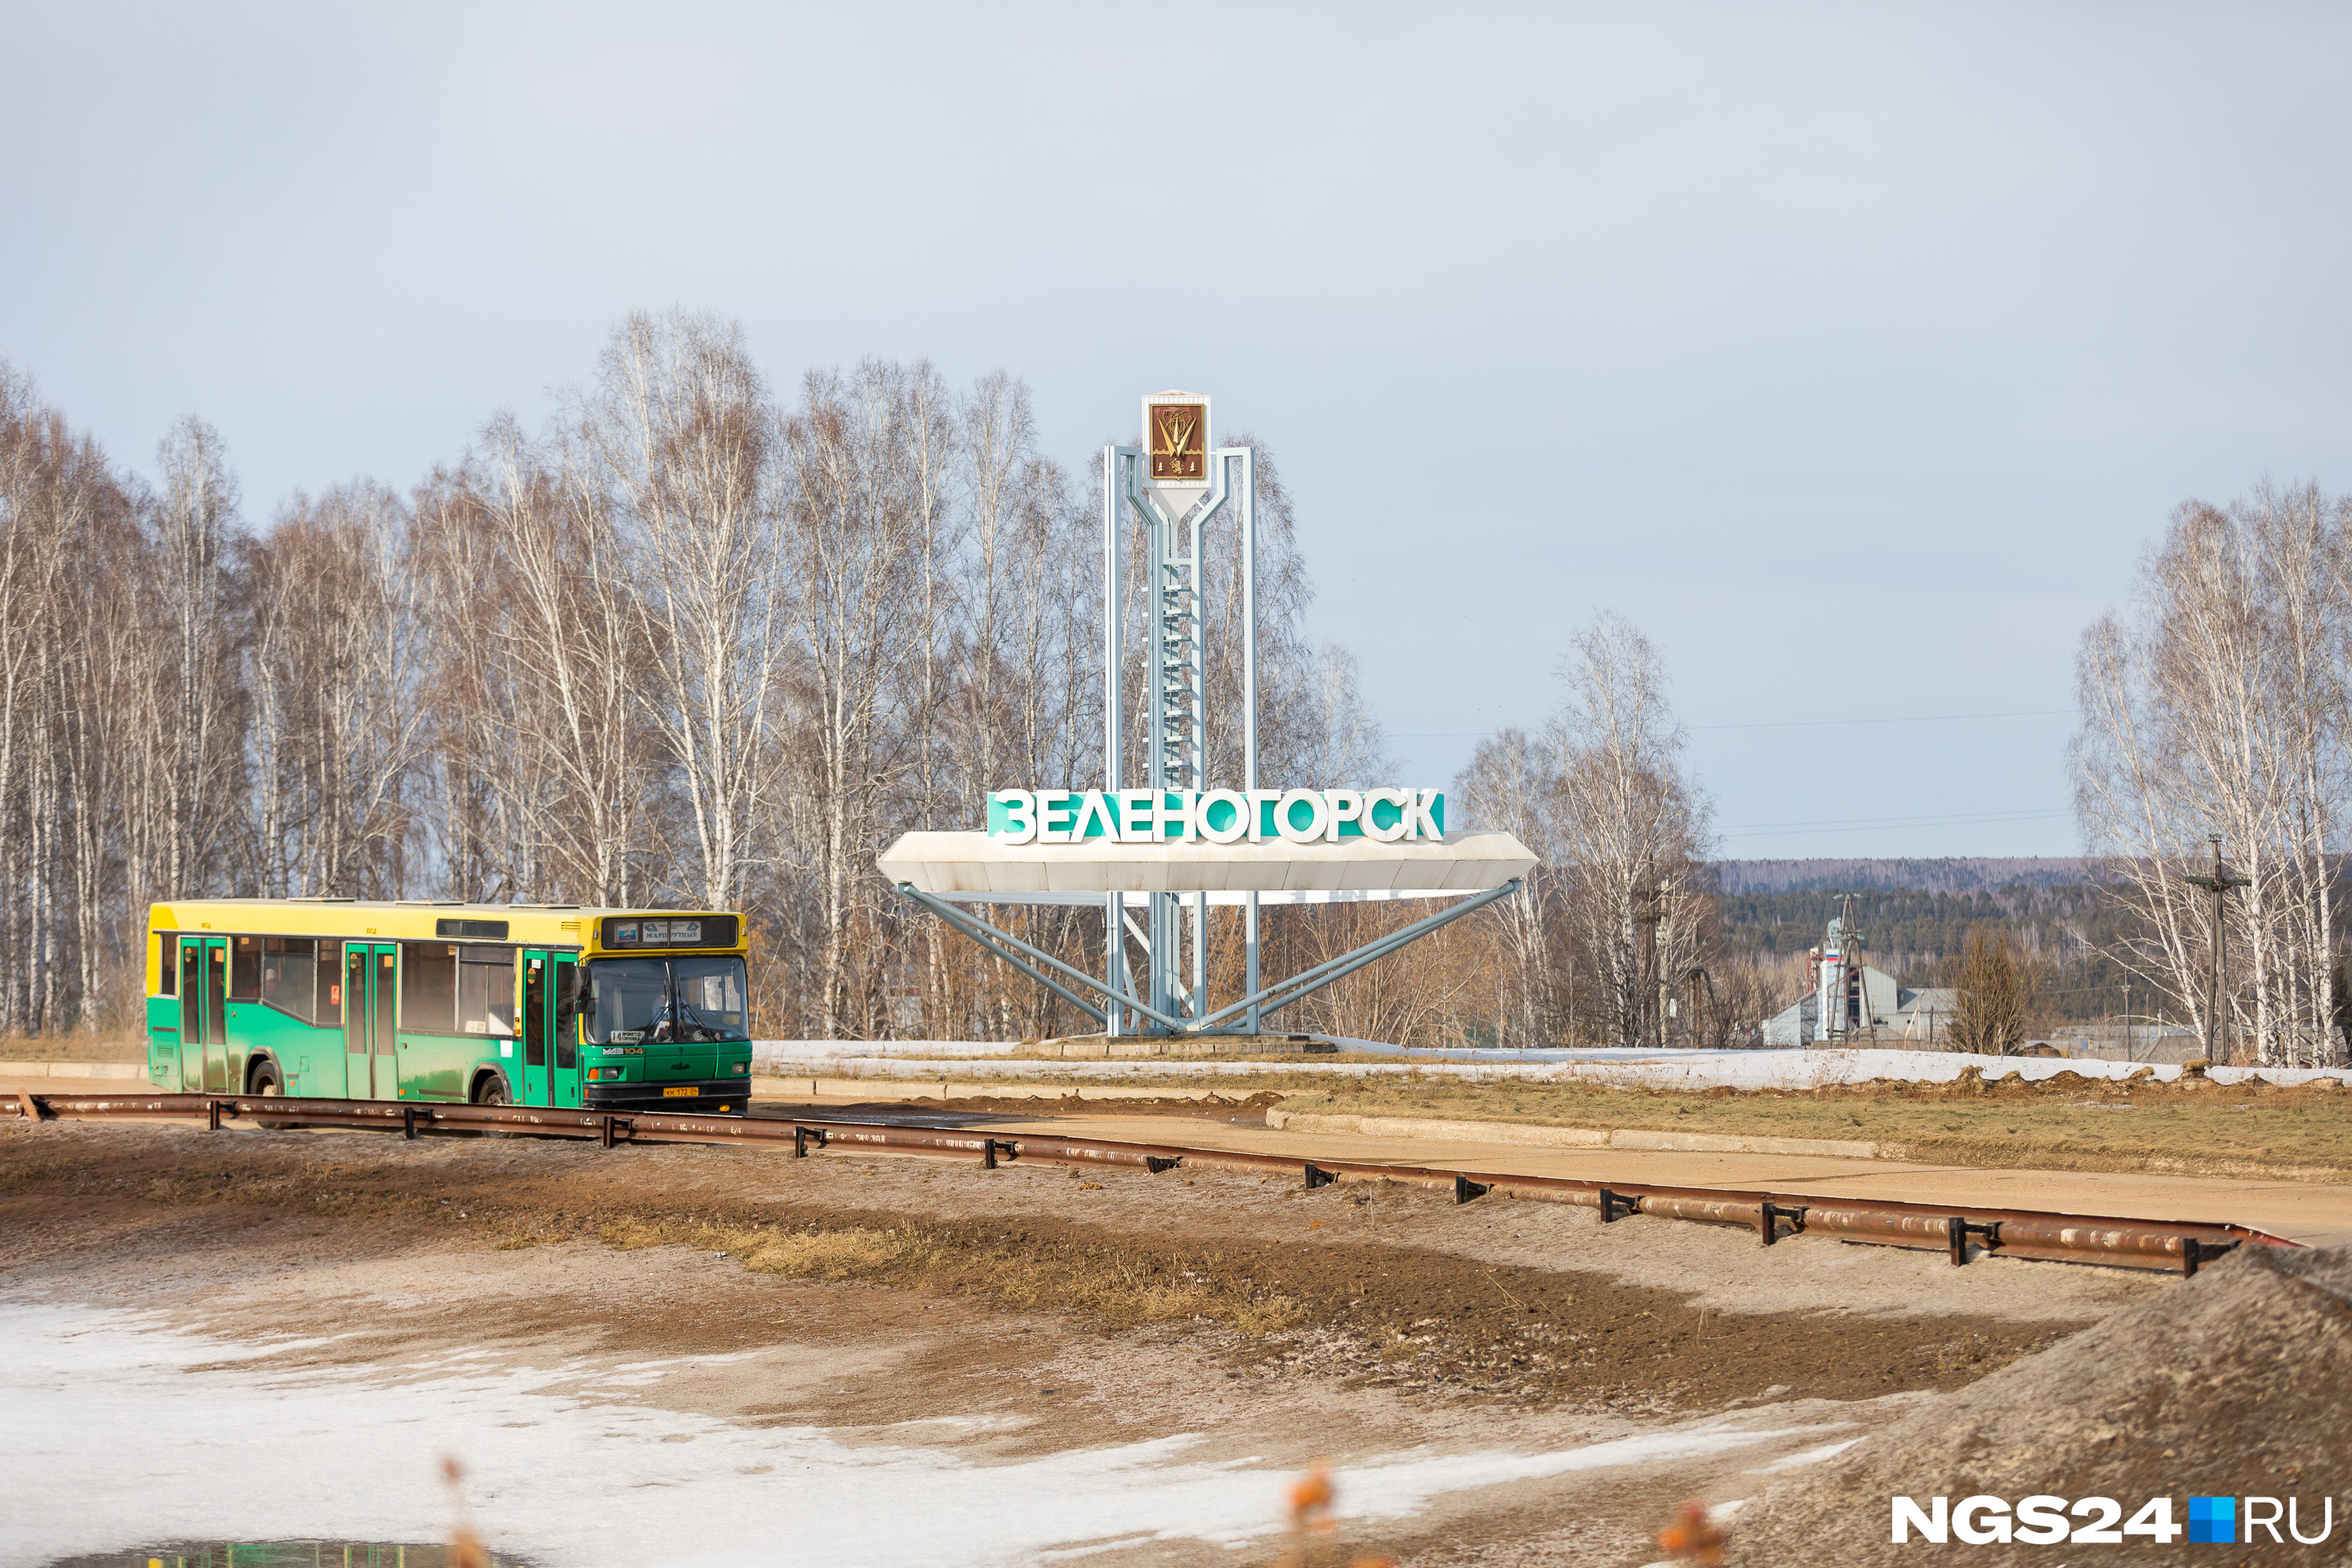 ЗАТО Зеленогорск находится в 160 километрах от Красноярска